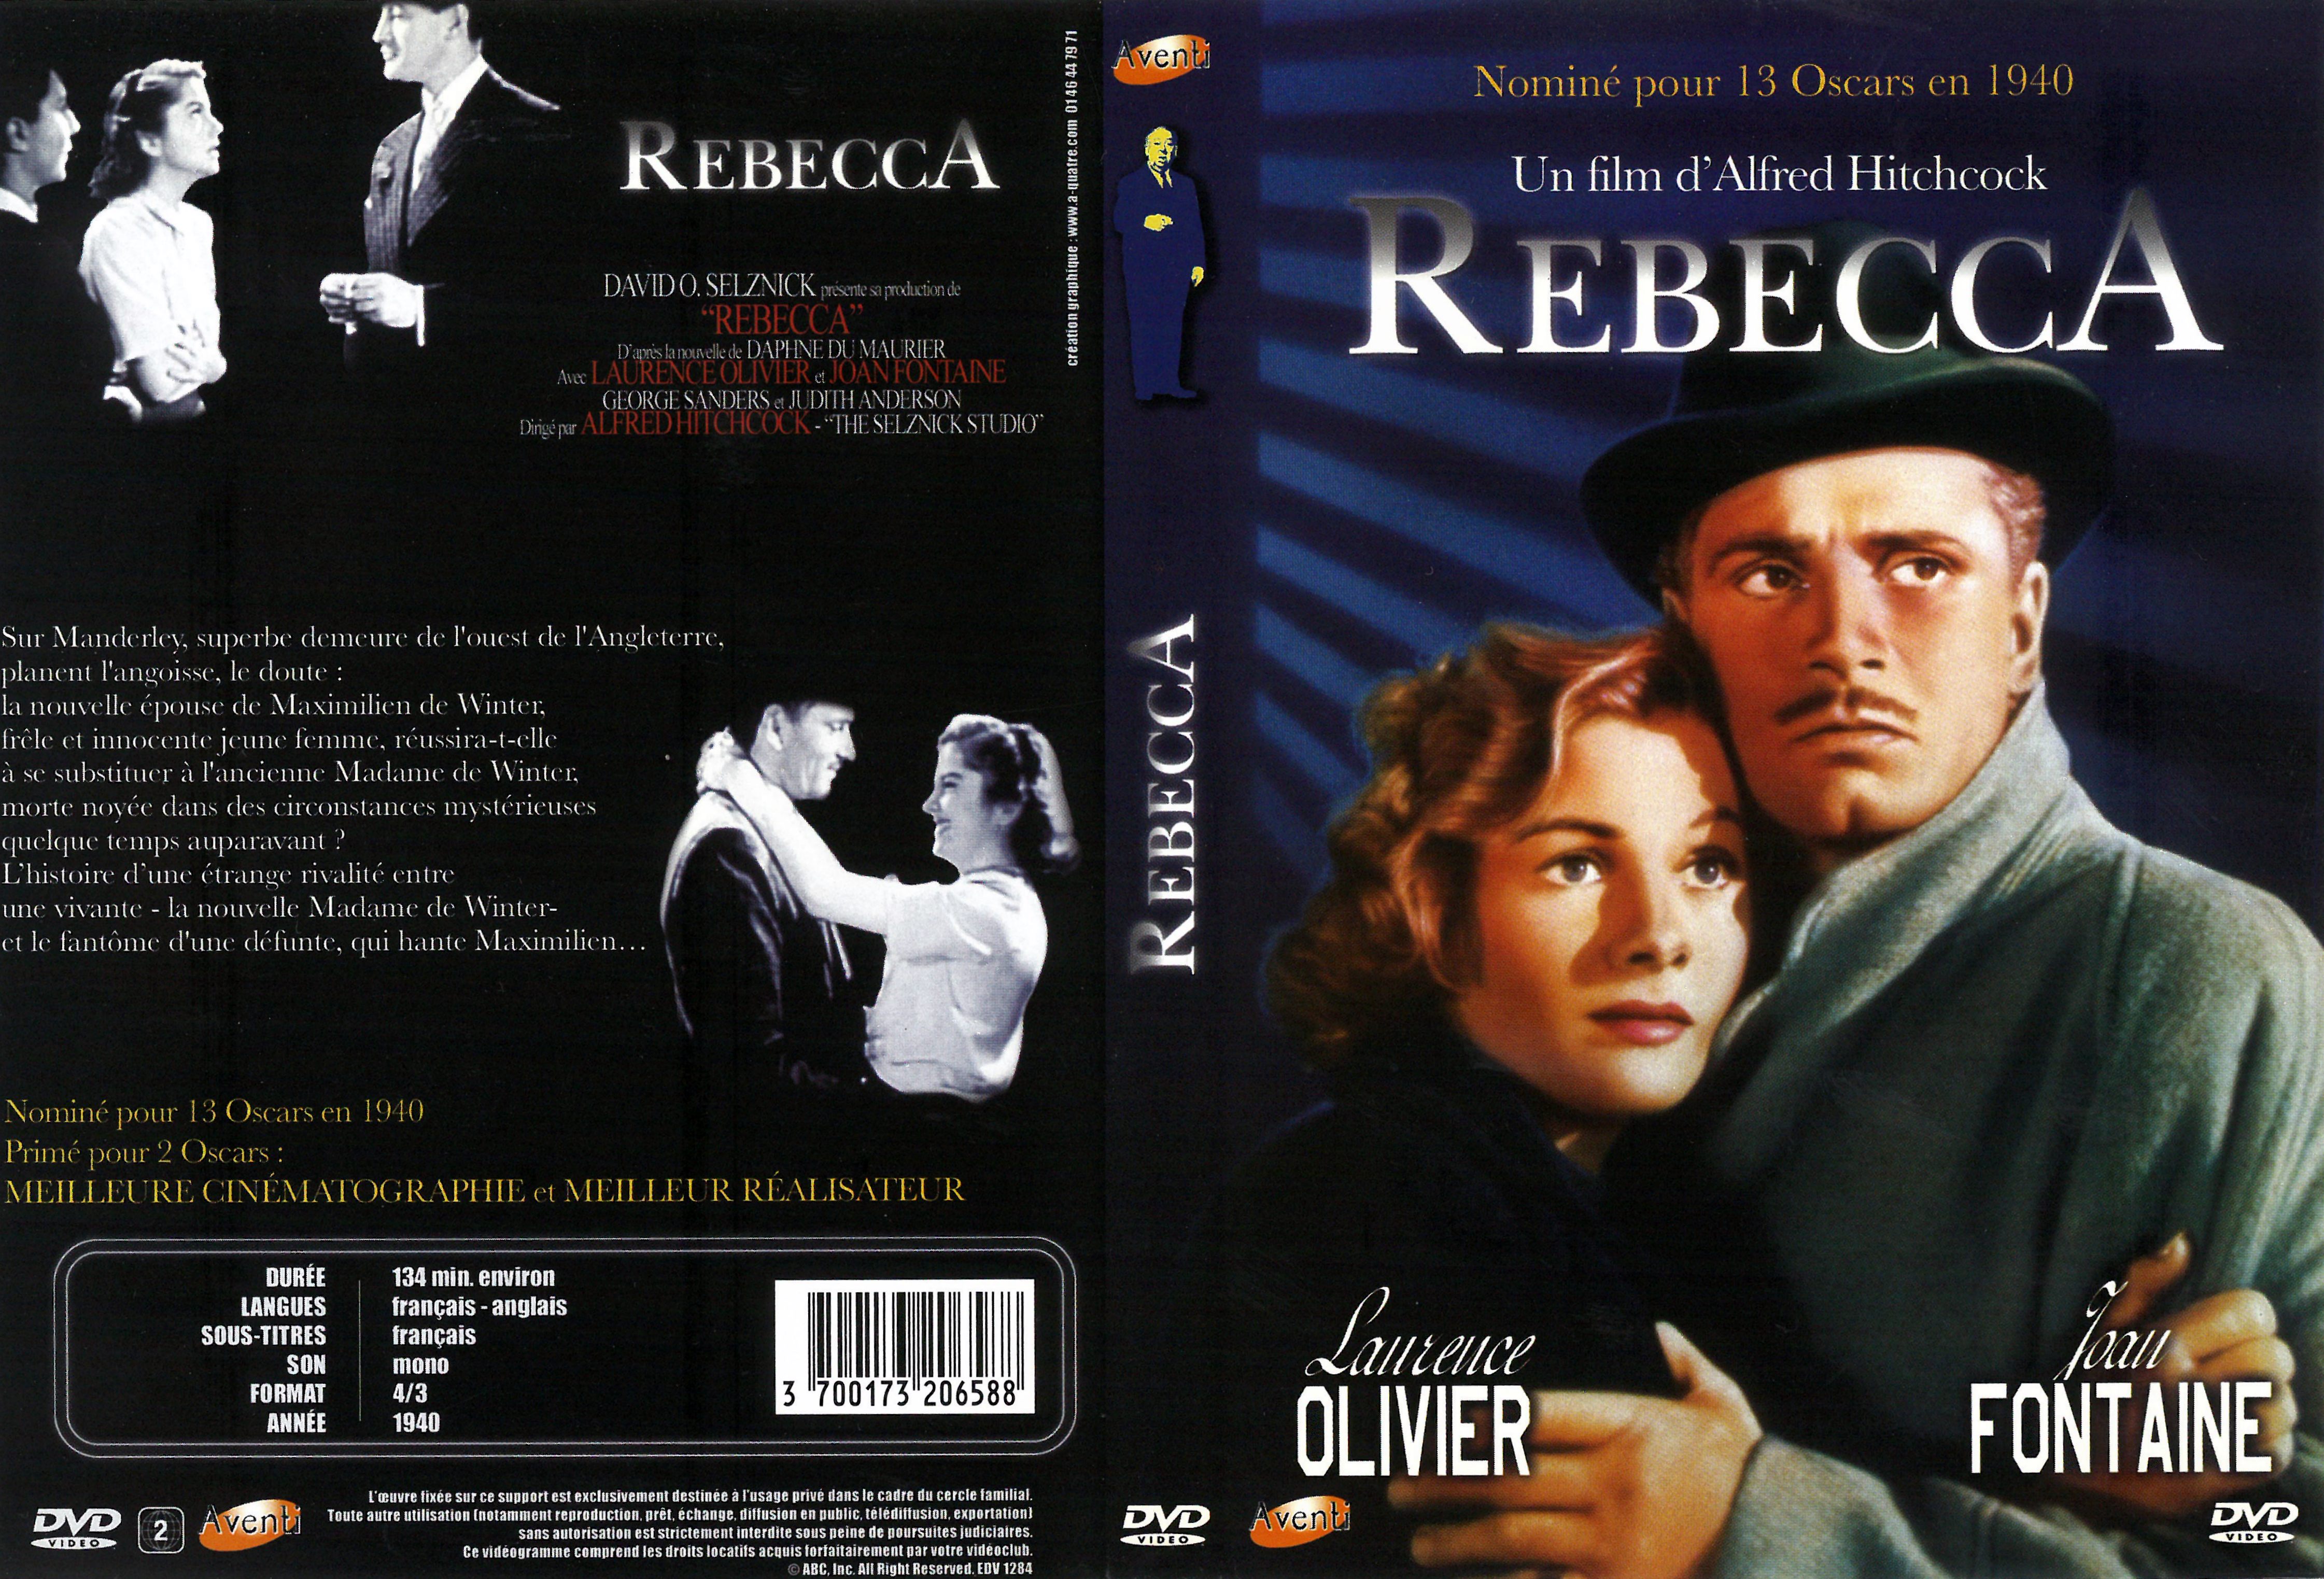 Jaquette DVD Rebecca v4